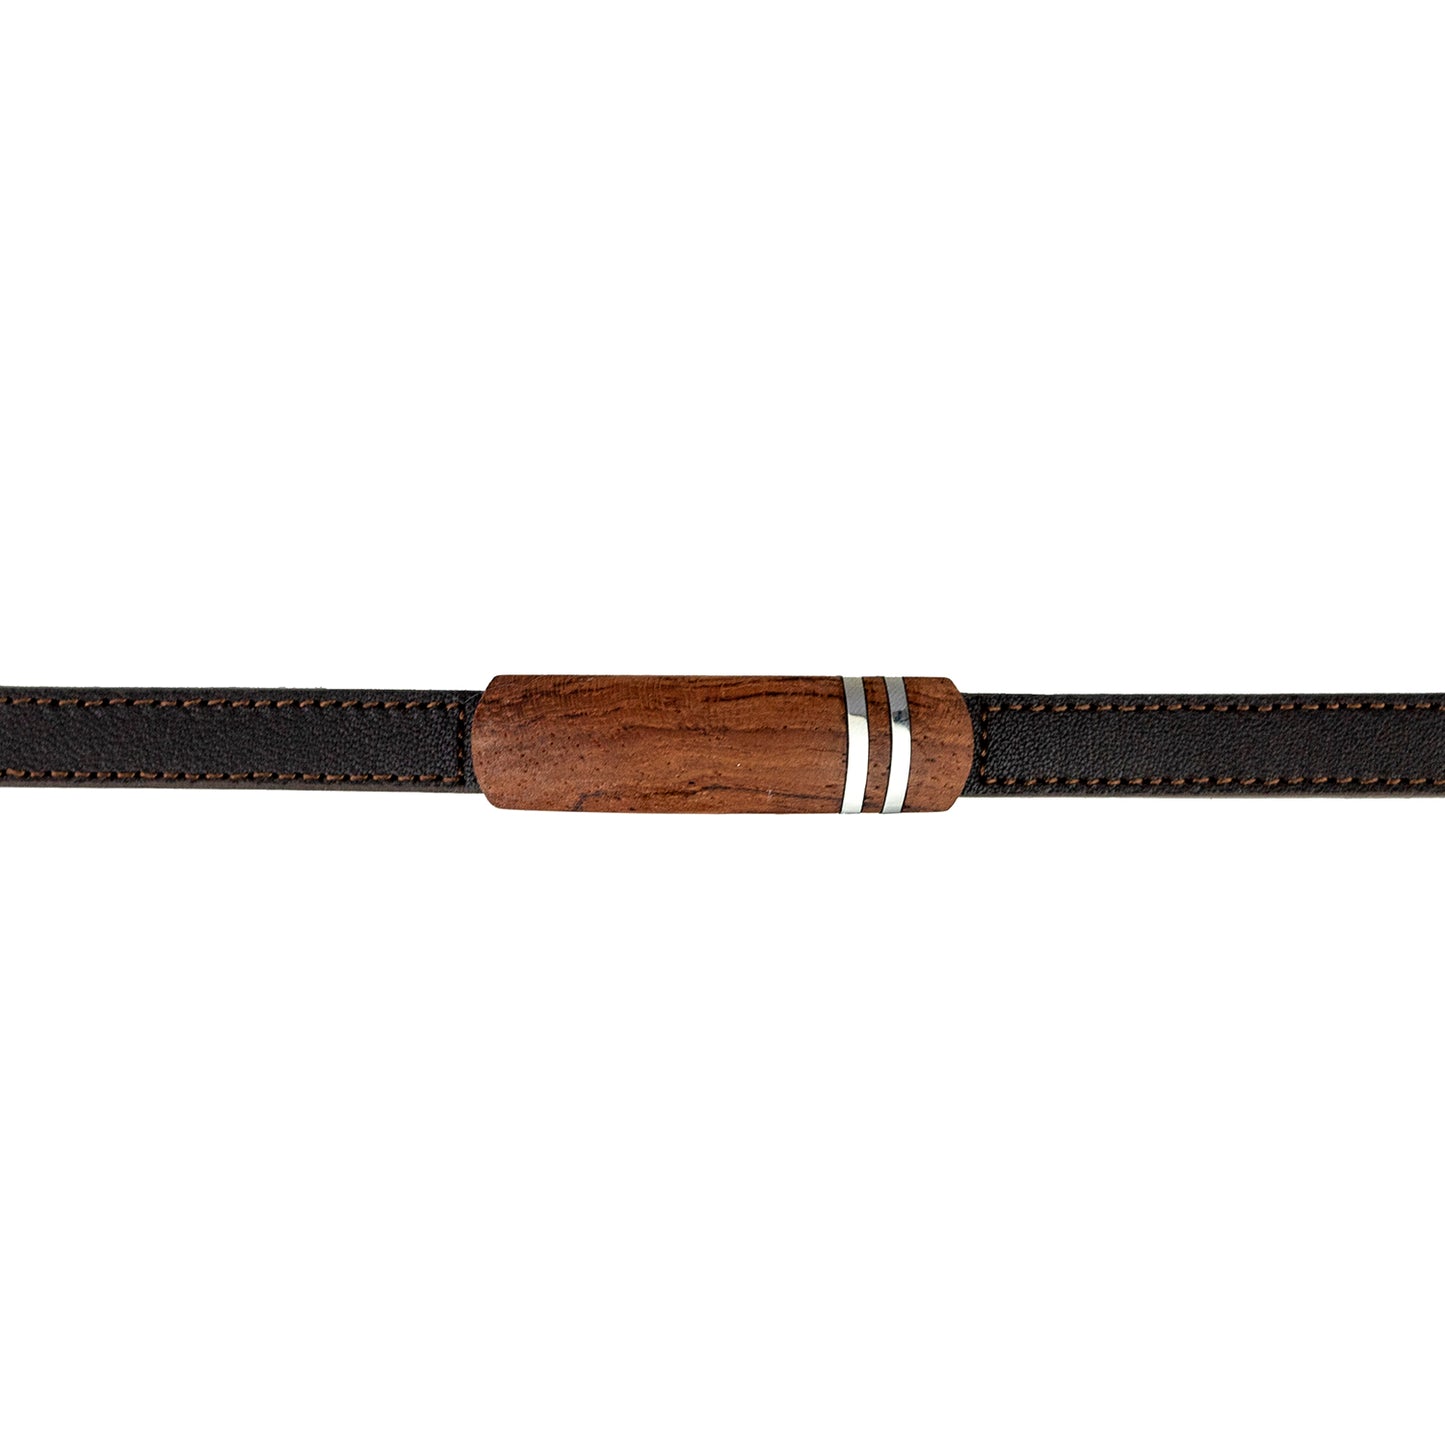 Bubinga Wood, Stainless Steel, & Leather Bracelet - 9.5"